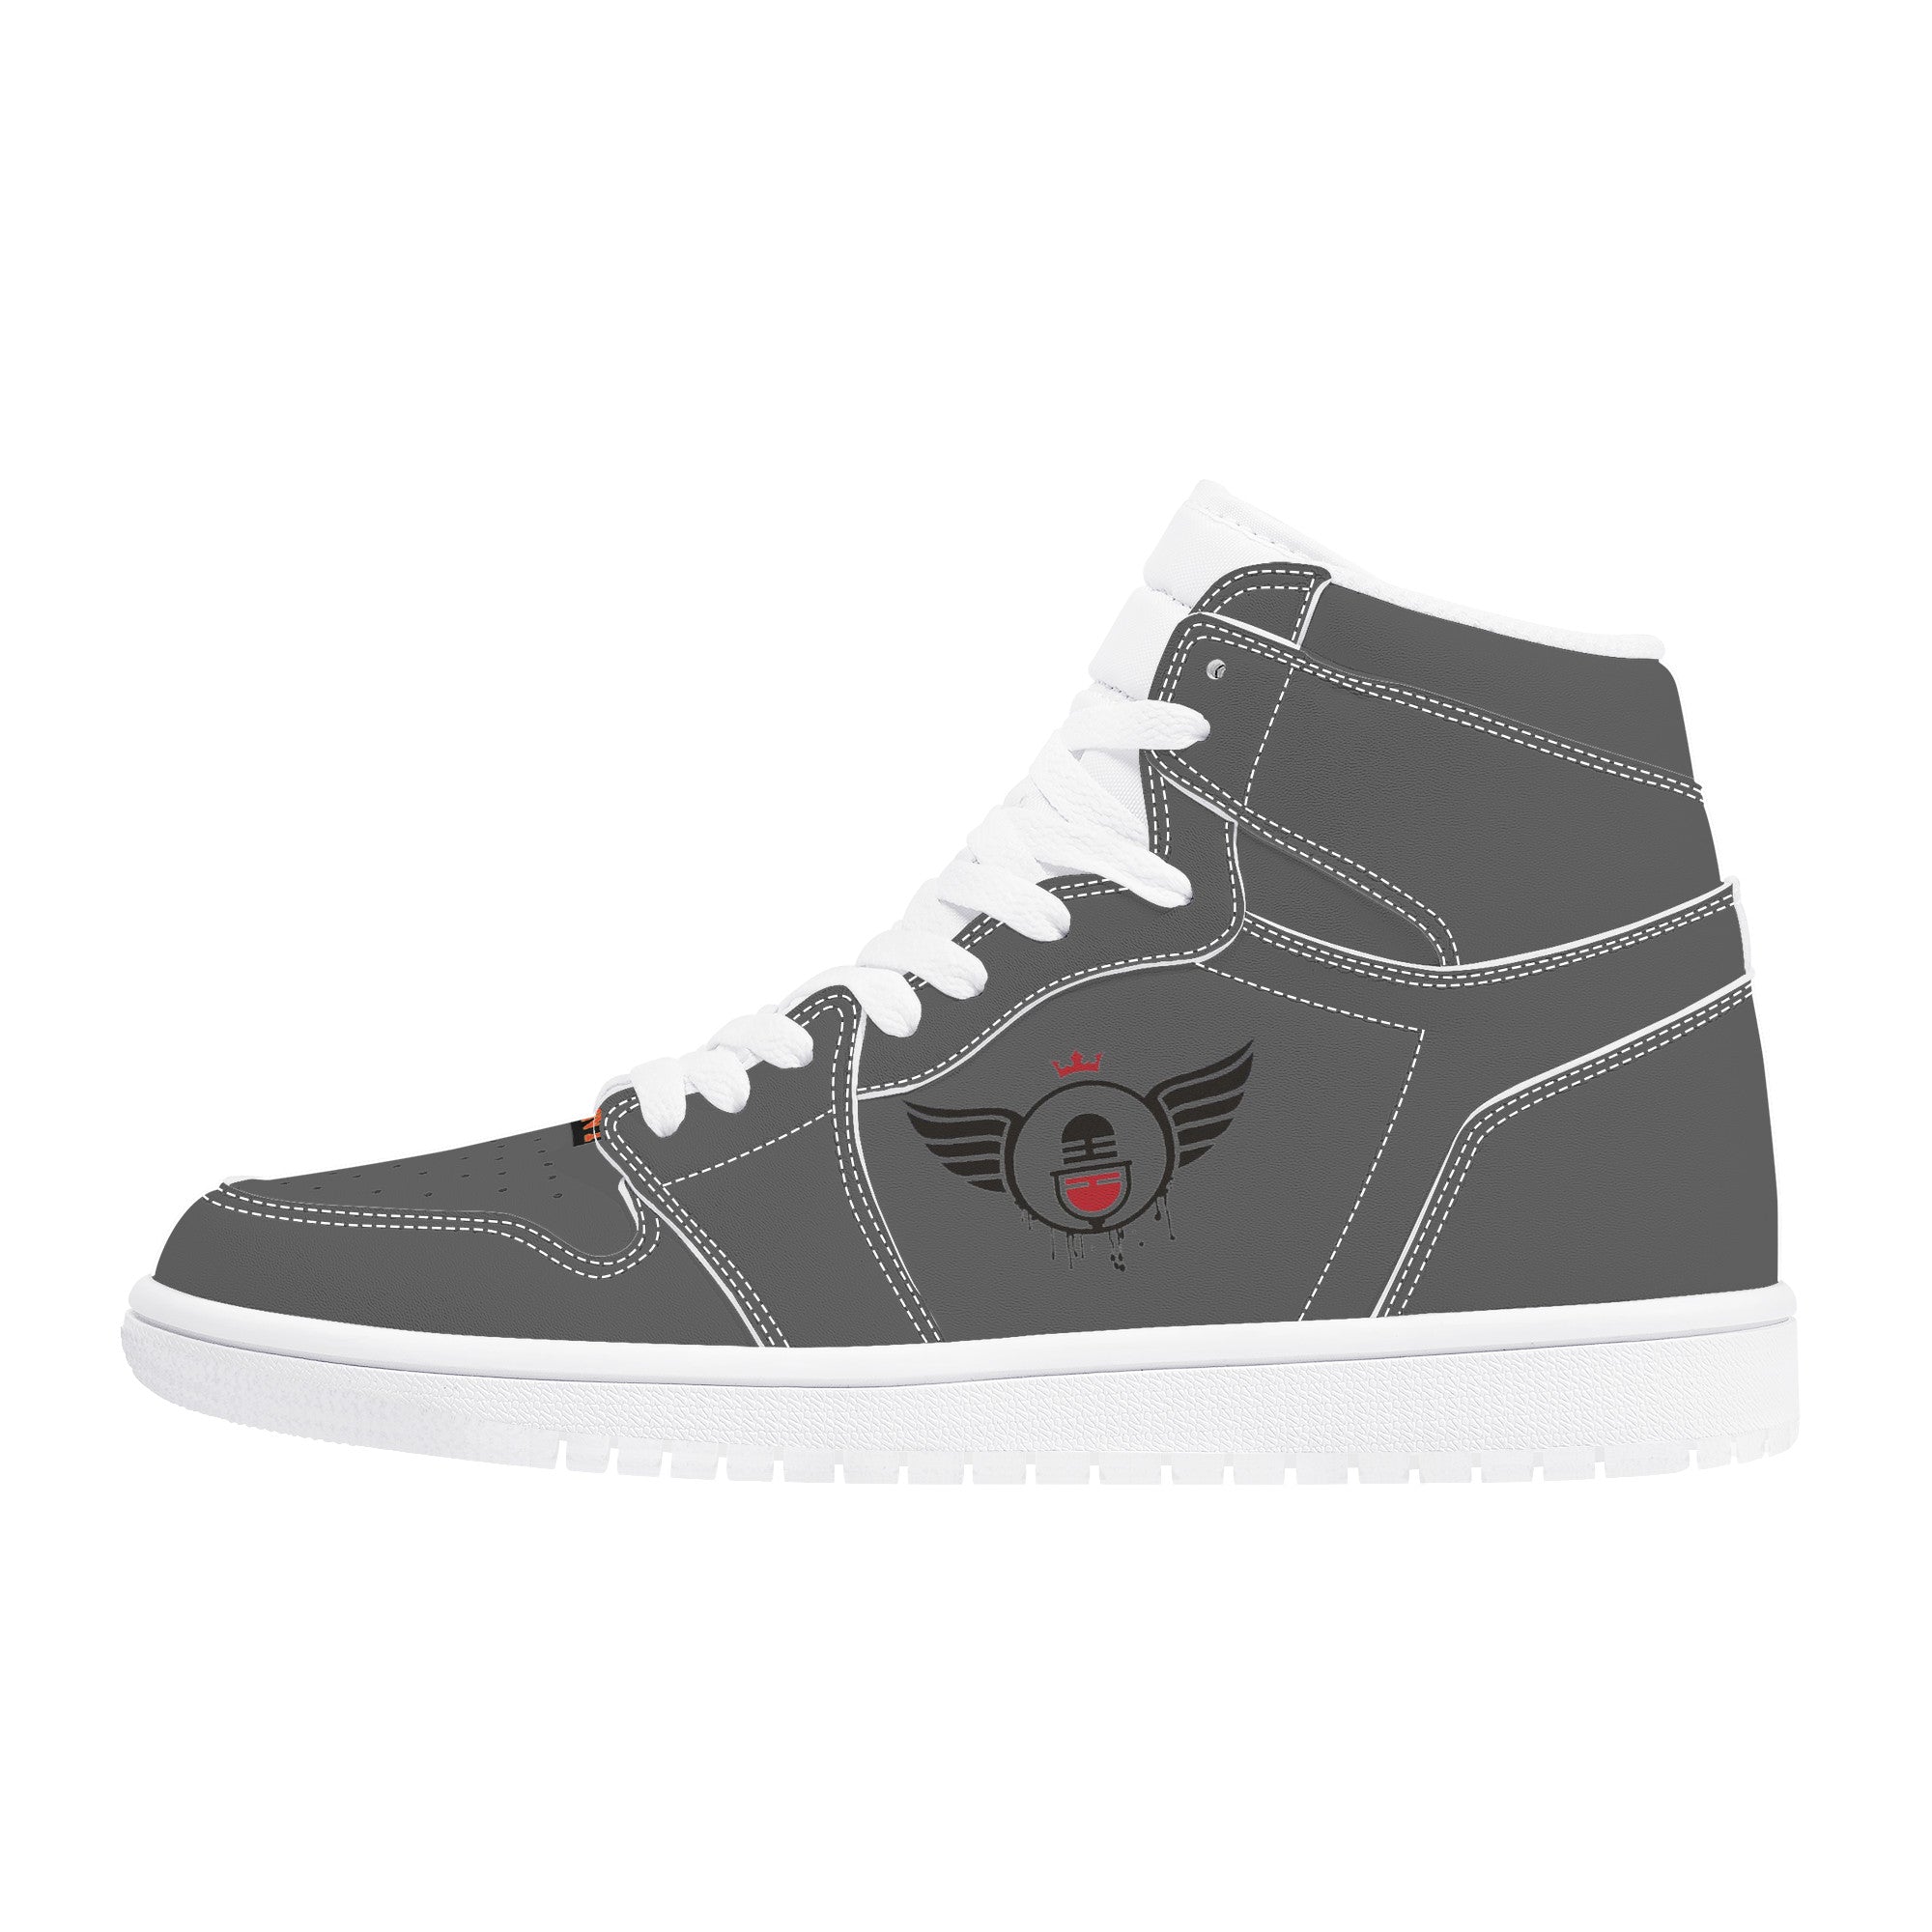 Basic Grey | Vision 1 Collection | High Top Sneaker - Designed Shoe Drop - Shoe Zero